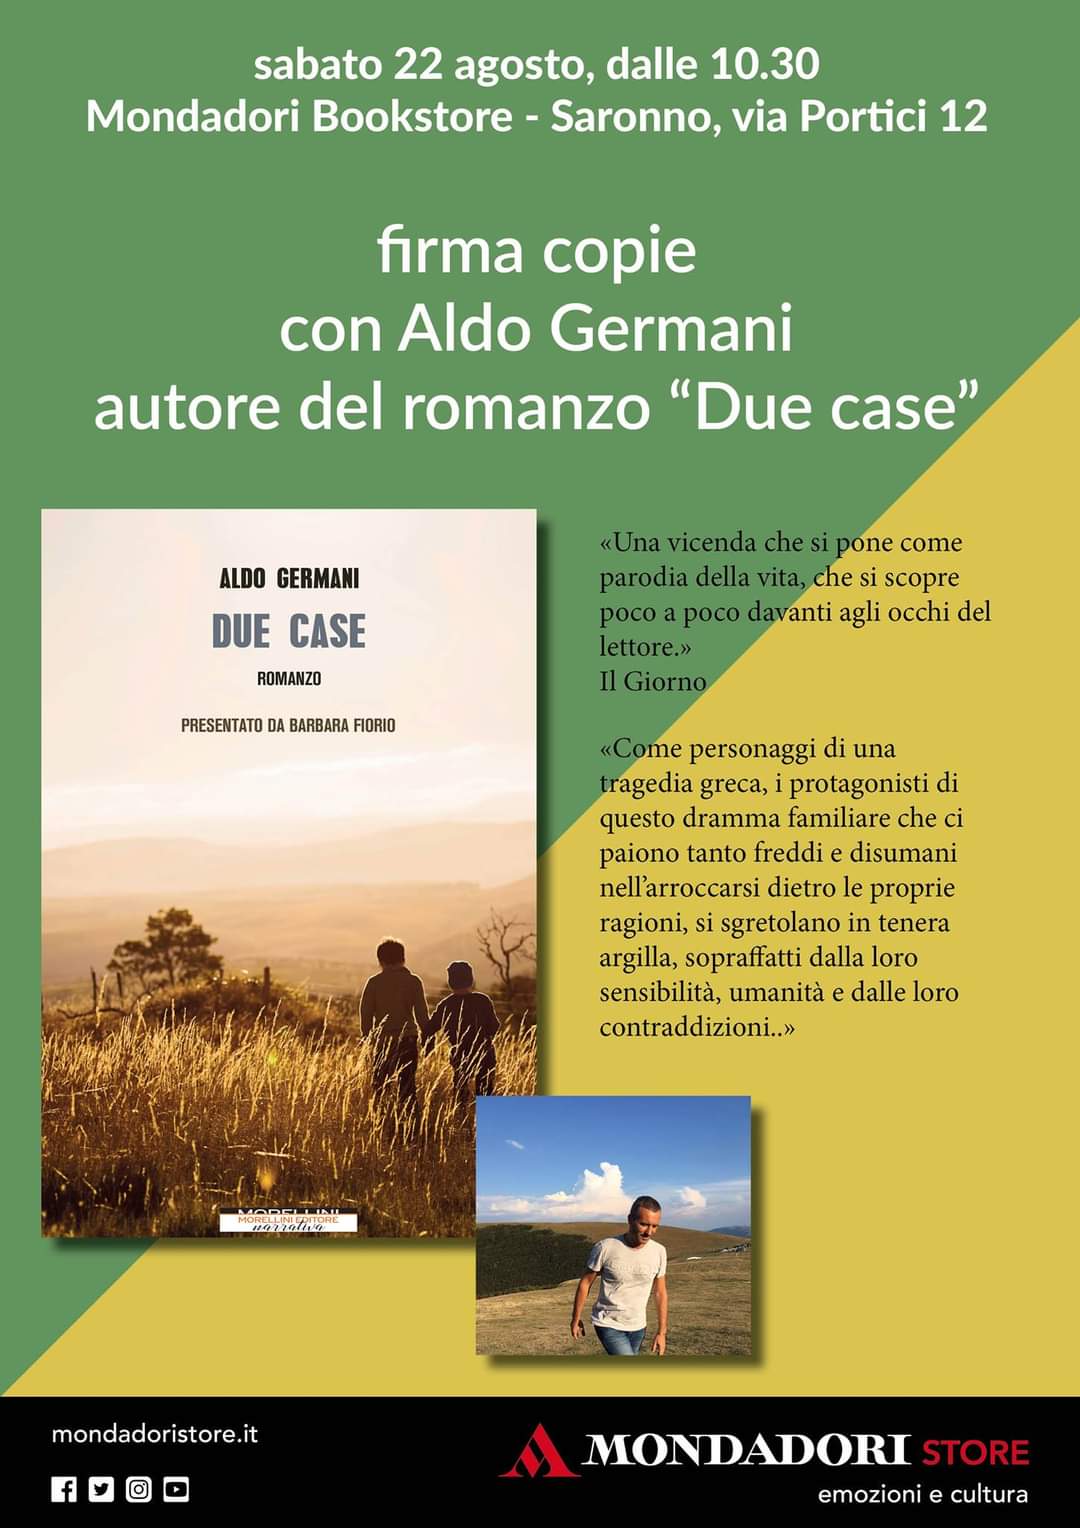 Aldo Germani per un “firma copie” in Mondadori